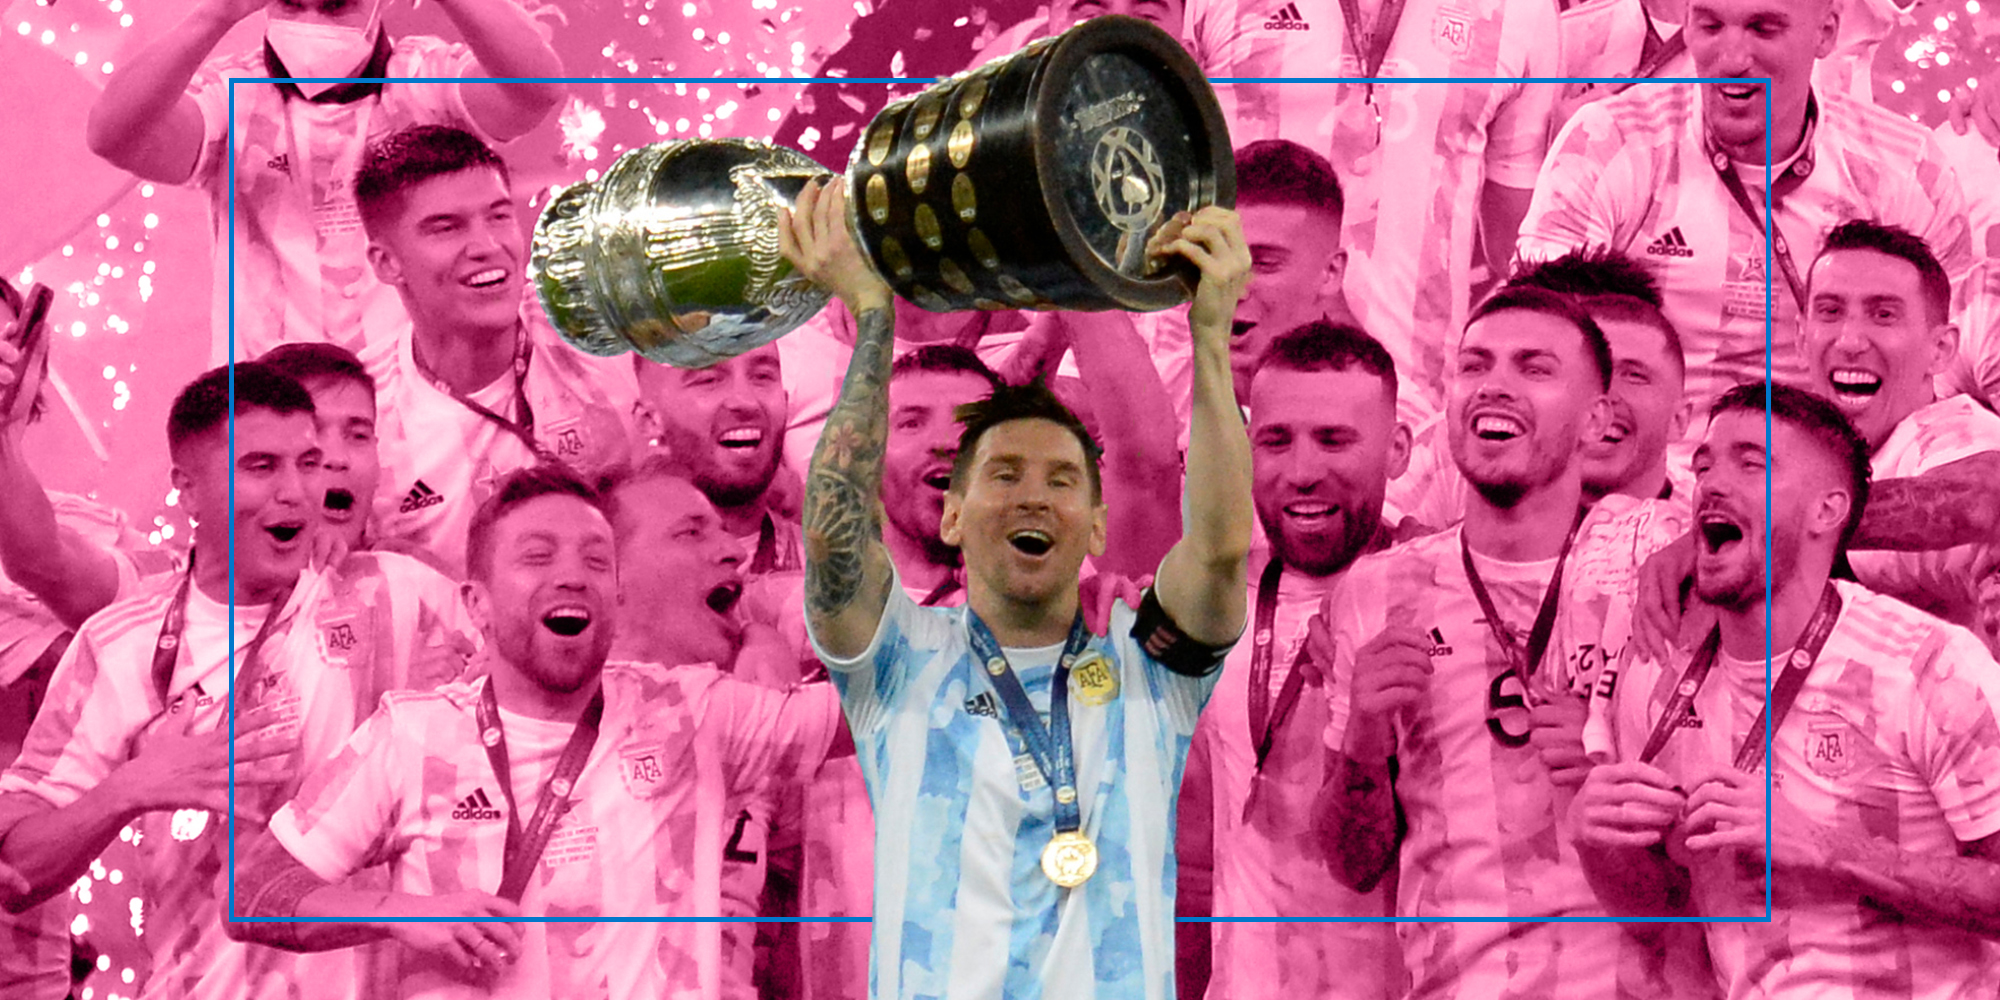 Messi celebrating